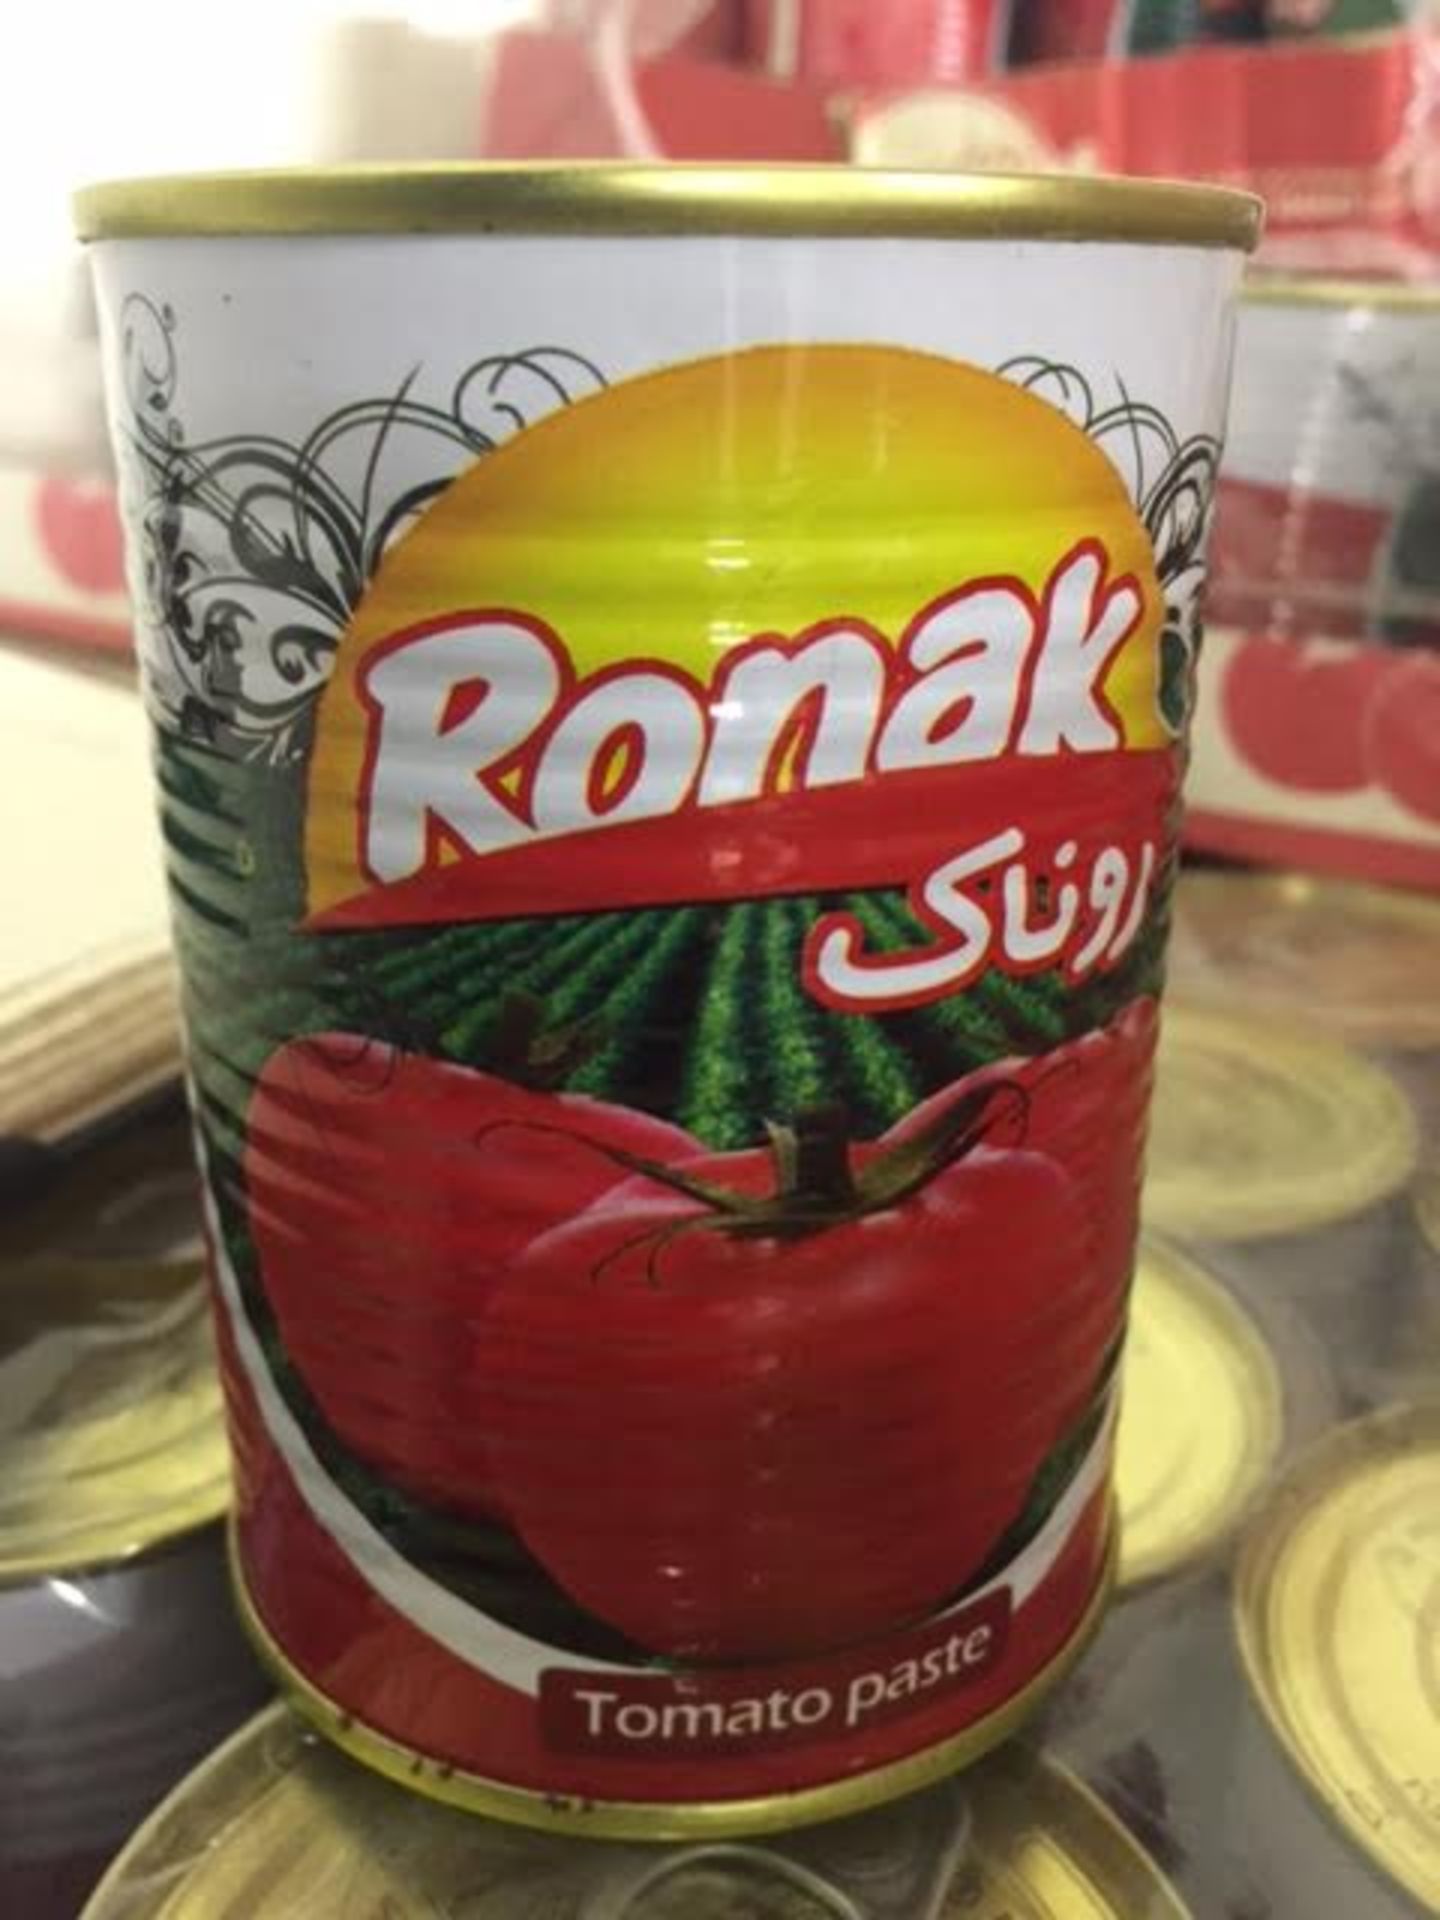 2,400 x Tins of Ronak Tomato Paste - Includes 100 x Cases of 24 x Tins of 400gr Tomato Paste -